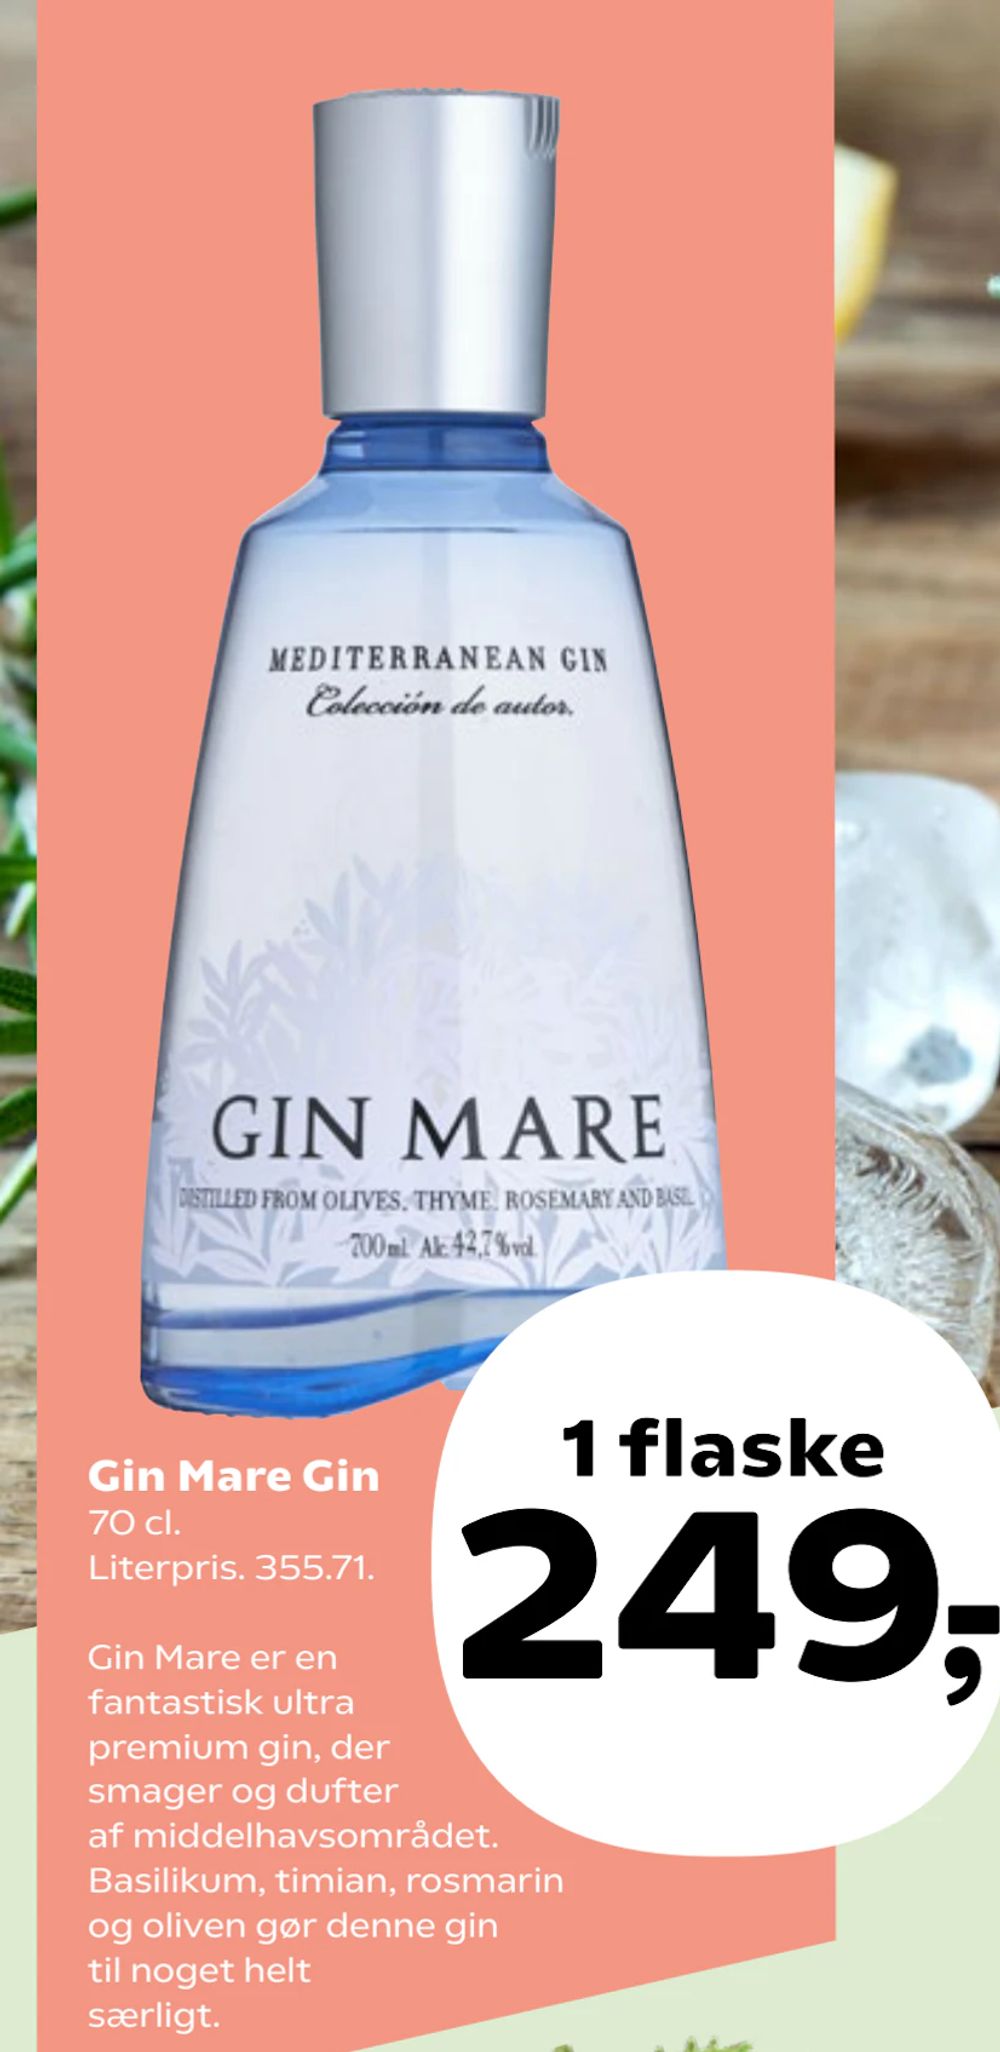 Tilbud på Gin Mare Gin fra Kvickly til 249 kr.